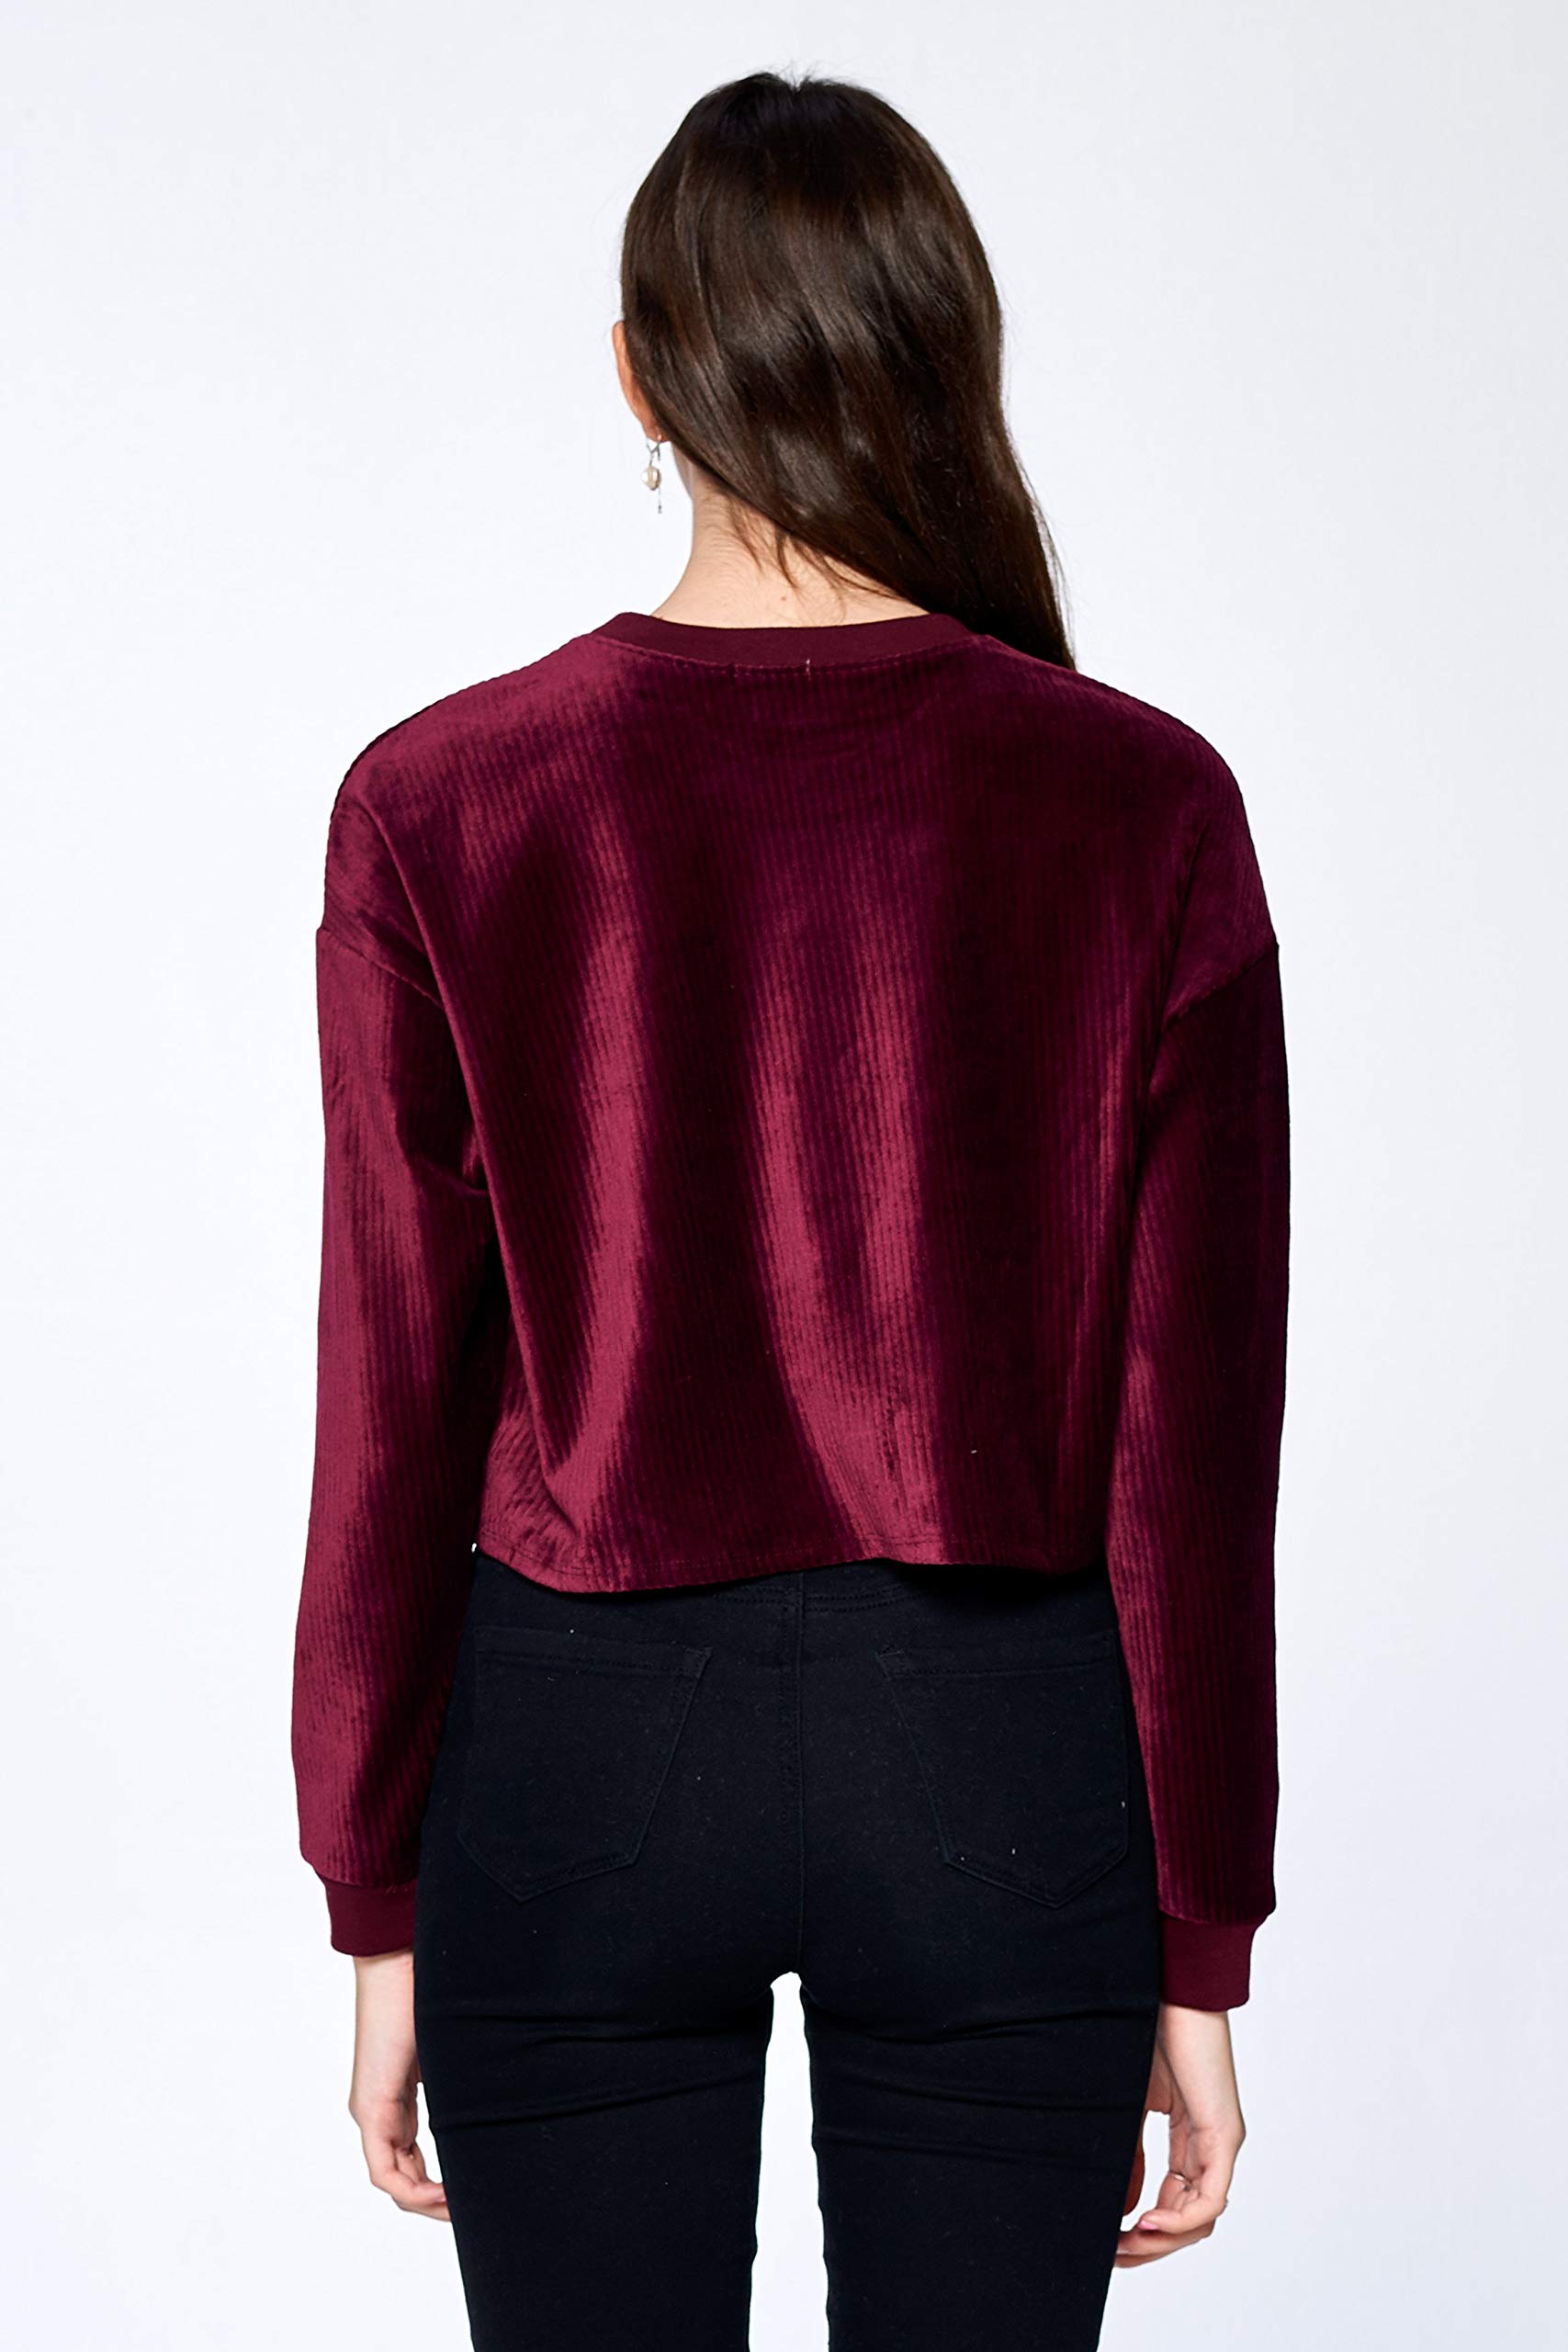 Khanomak Women's Long Sleeve Velvet Ribbed Crewneck Sweater Top